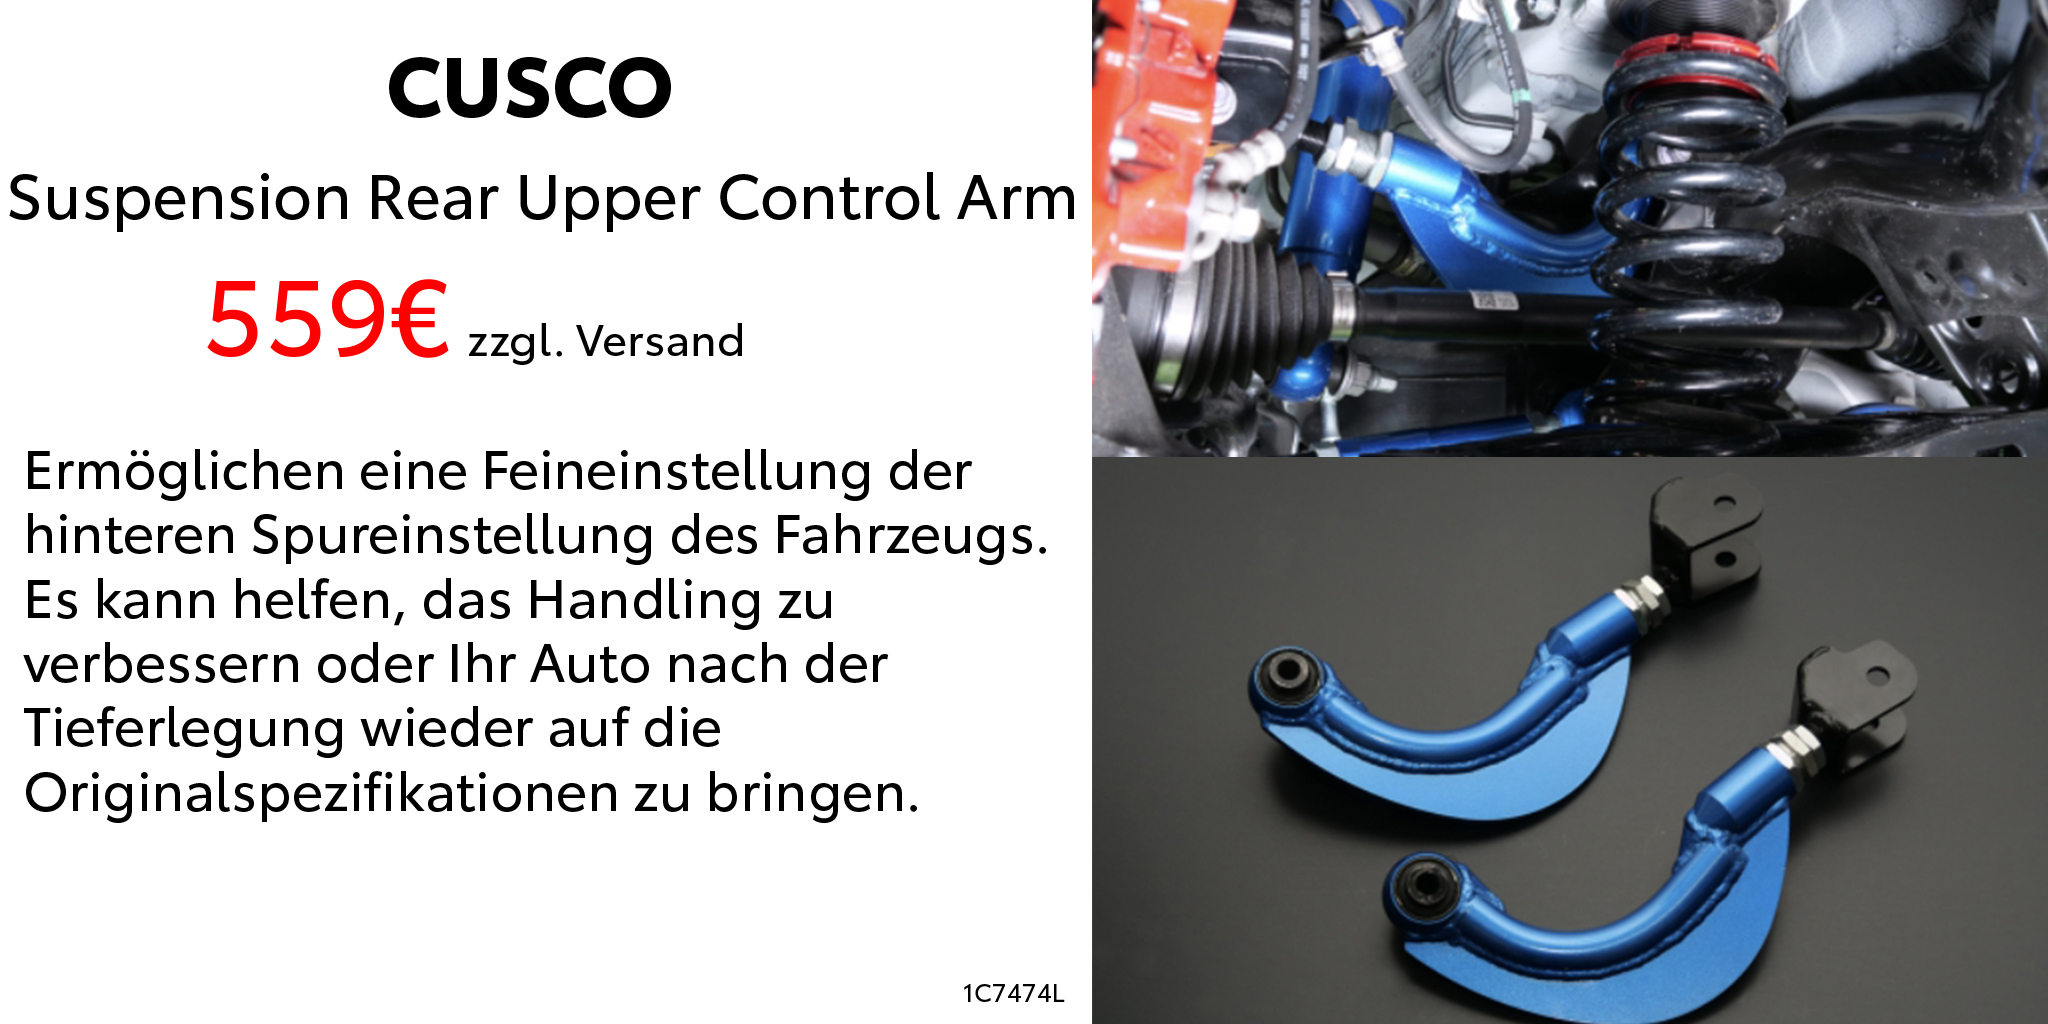 Cusco_Suspension-Rear-Upper-Control-Arm